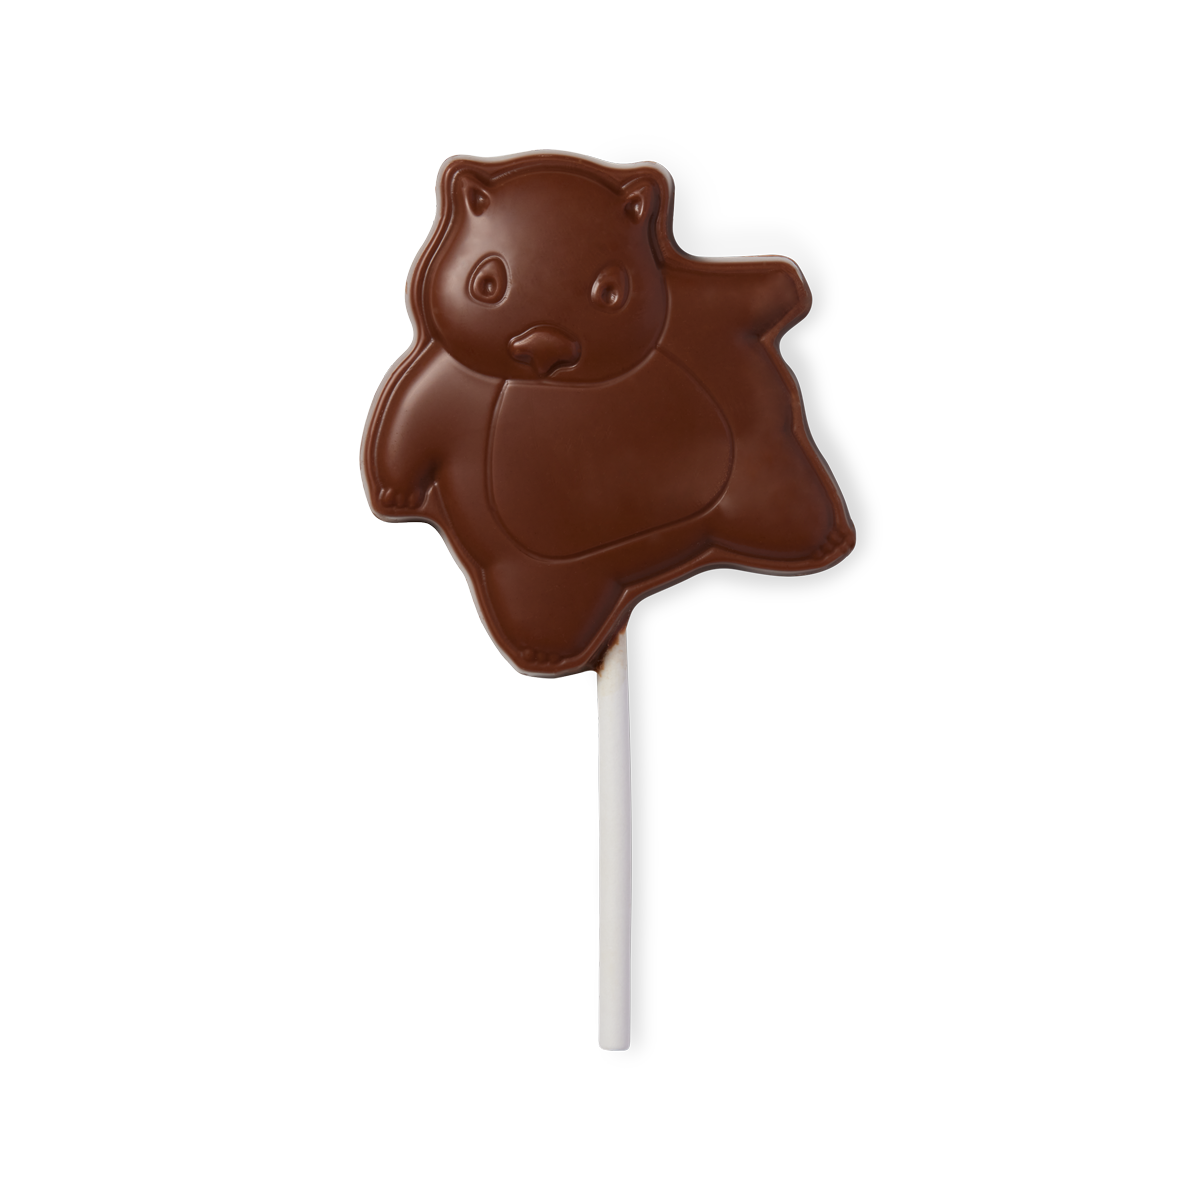 Wilma Wombat Pop | Milk Chocolate